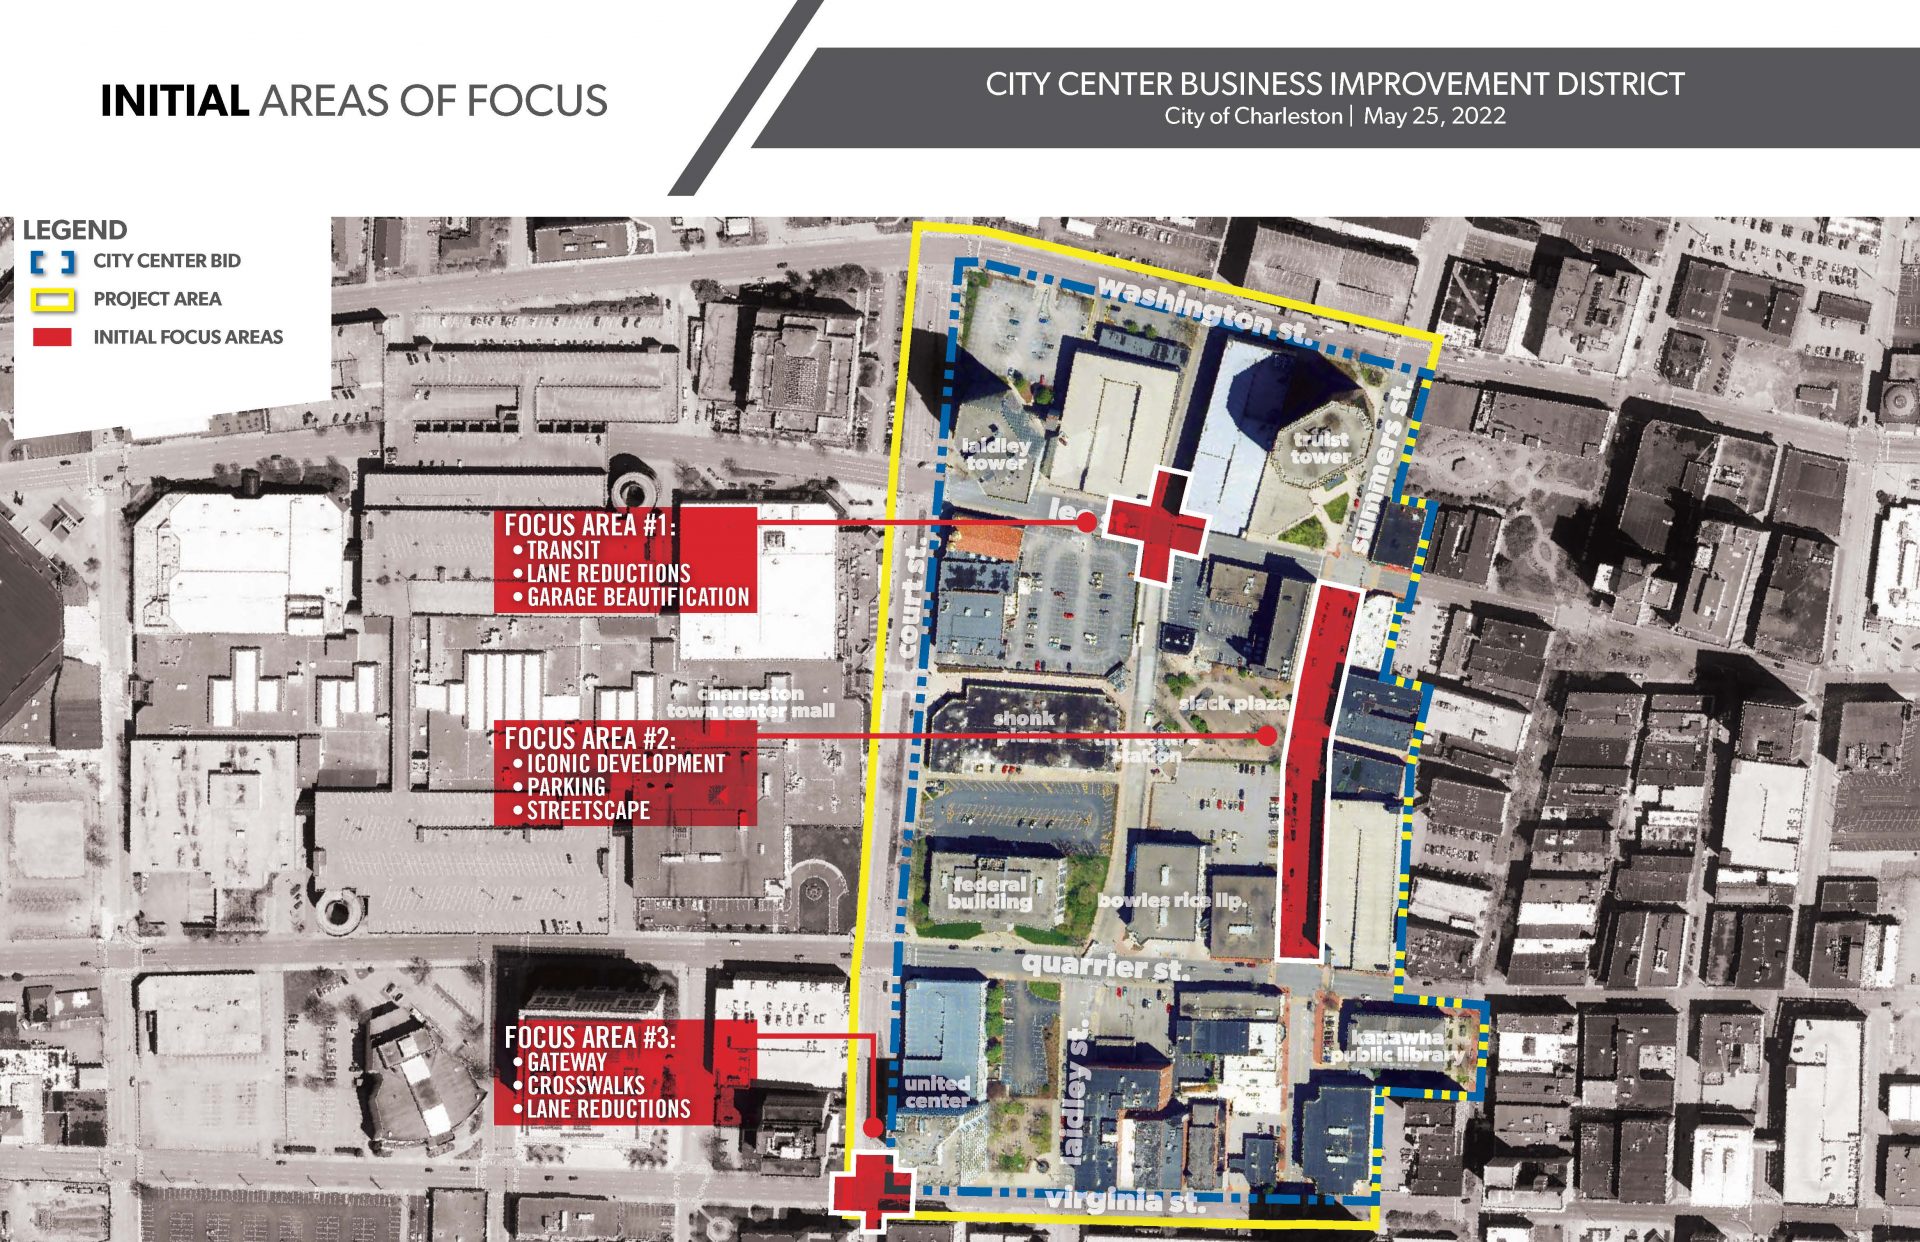 City Center Business Improvement District